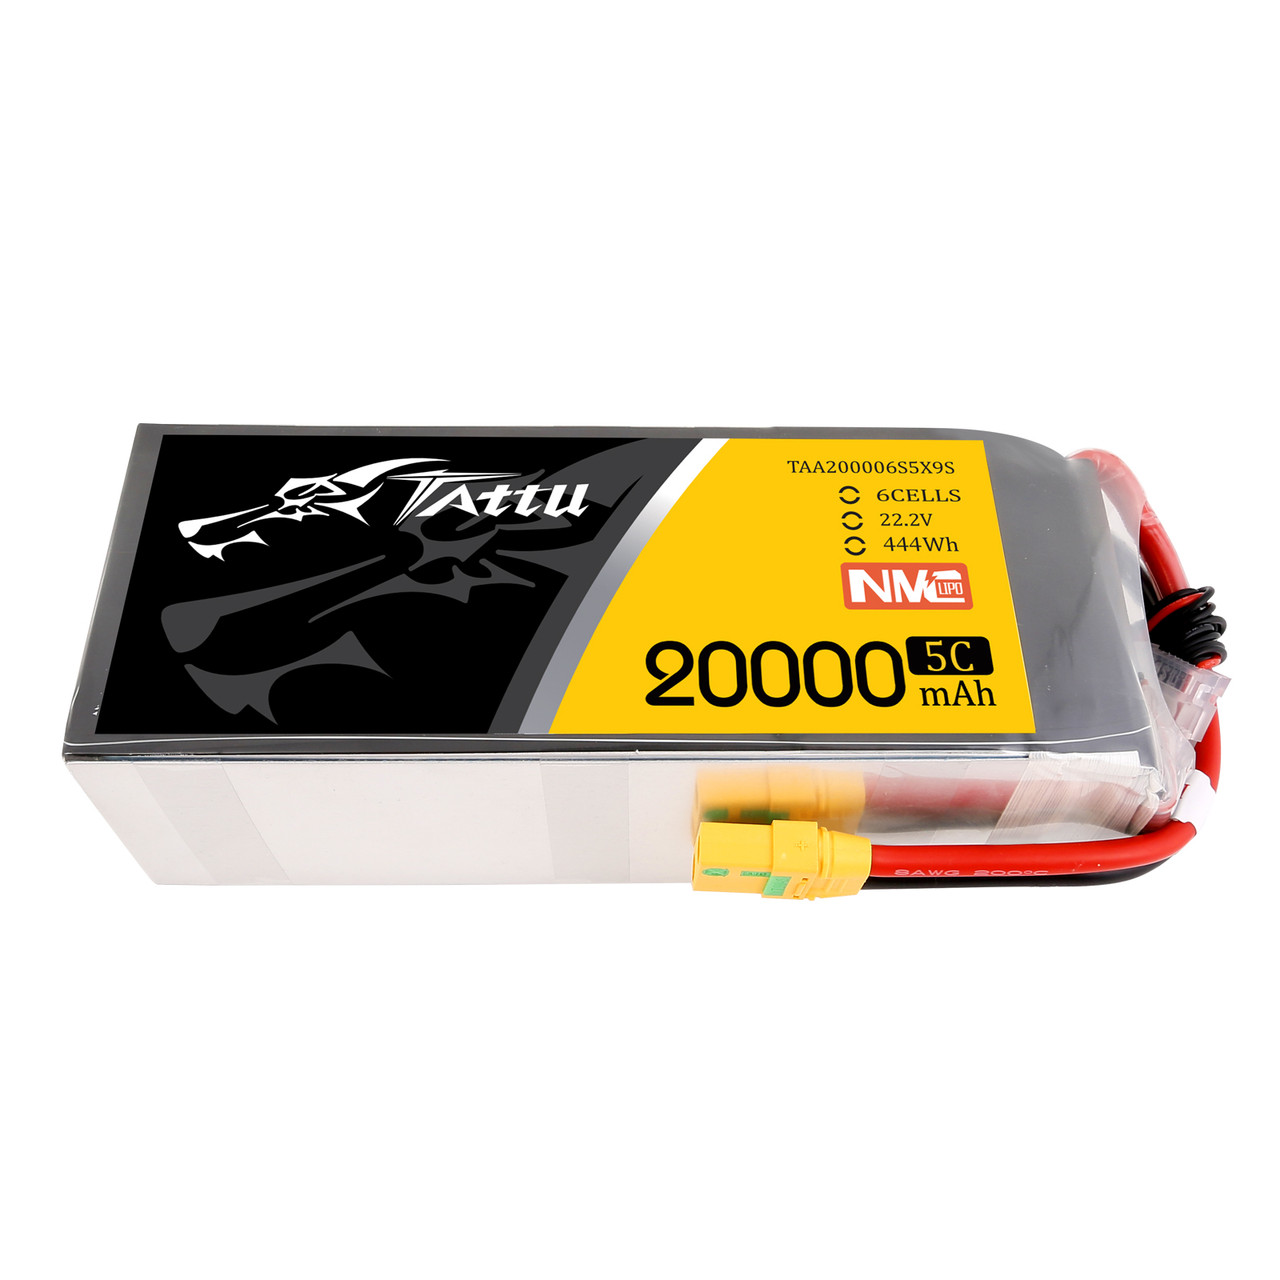 Tattu NMC 20000mAh 6s 5C 22.2V Lipo Battery Pack with XT90S plug